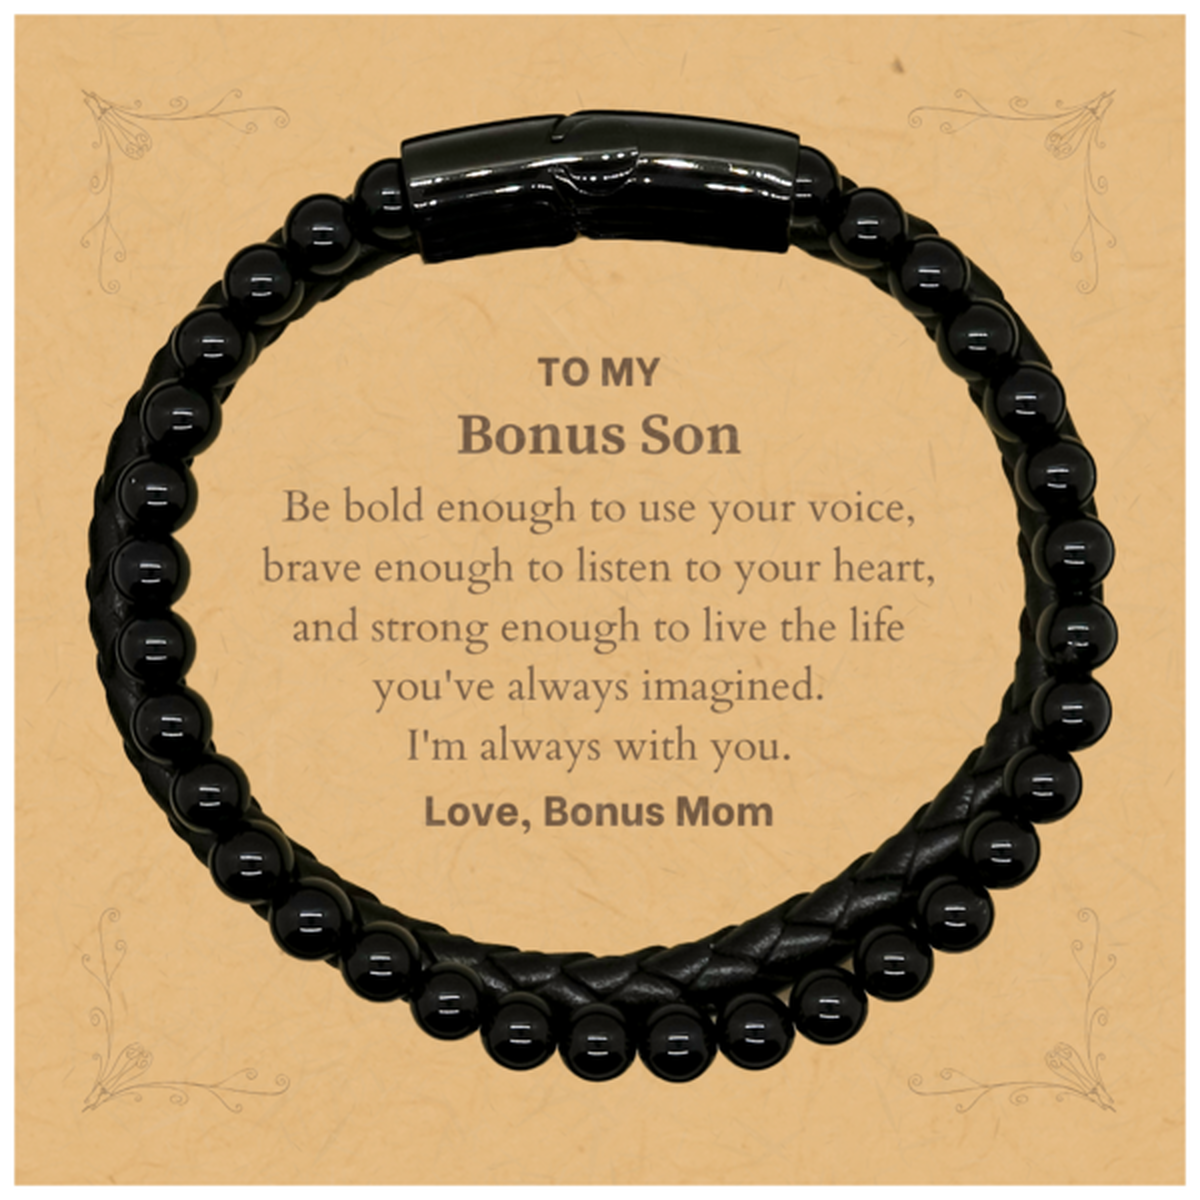 Keepsake Bonus Son Stone Leather Bracelets Gift Idea Graduation Christmas Birthday Bonus Son from Bonus Mom, Bonus Son Be bold enough to use your voice, brave enough to listen to your heart. Love, Bonus Mom